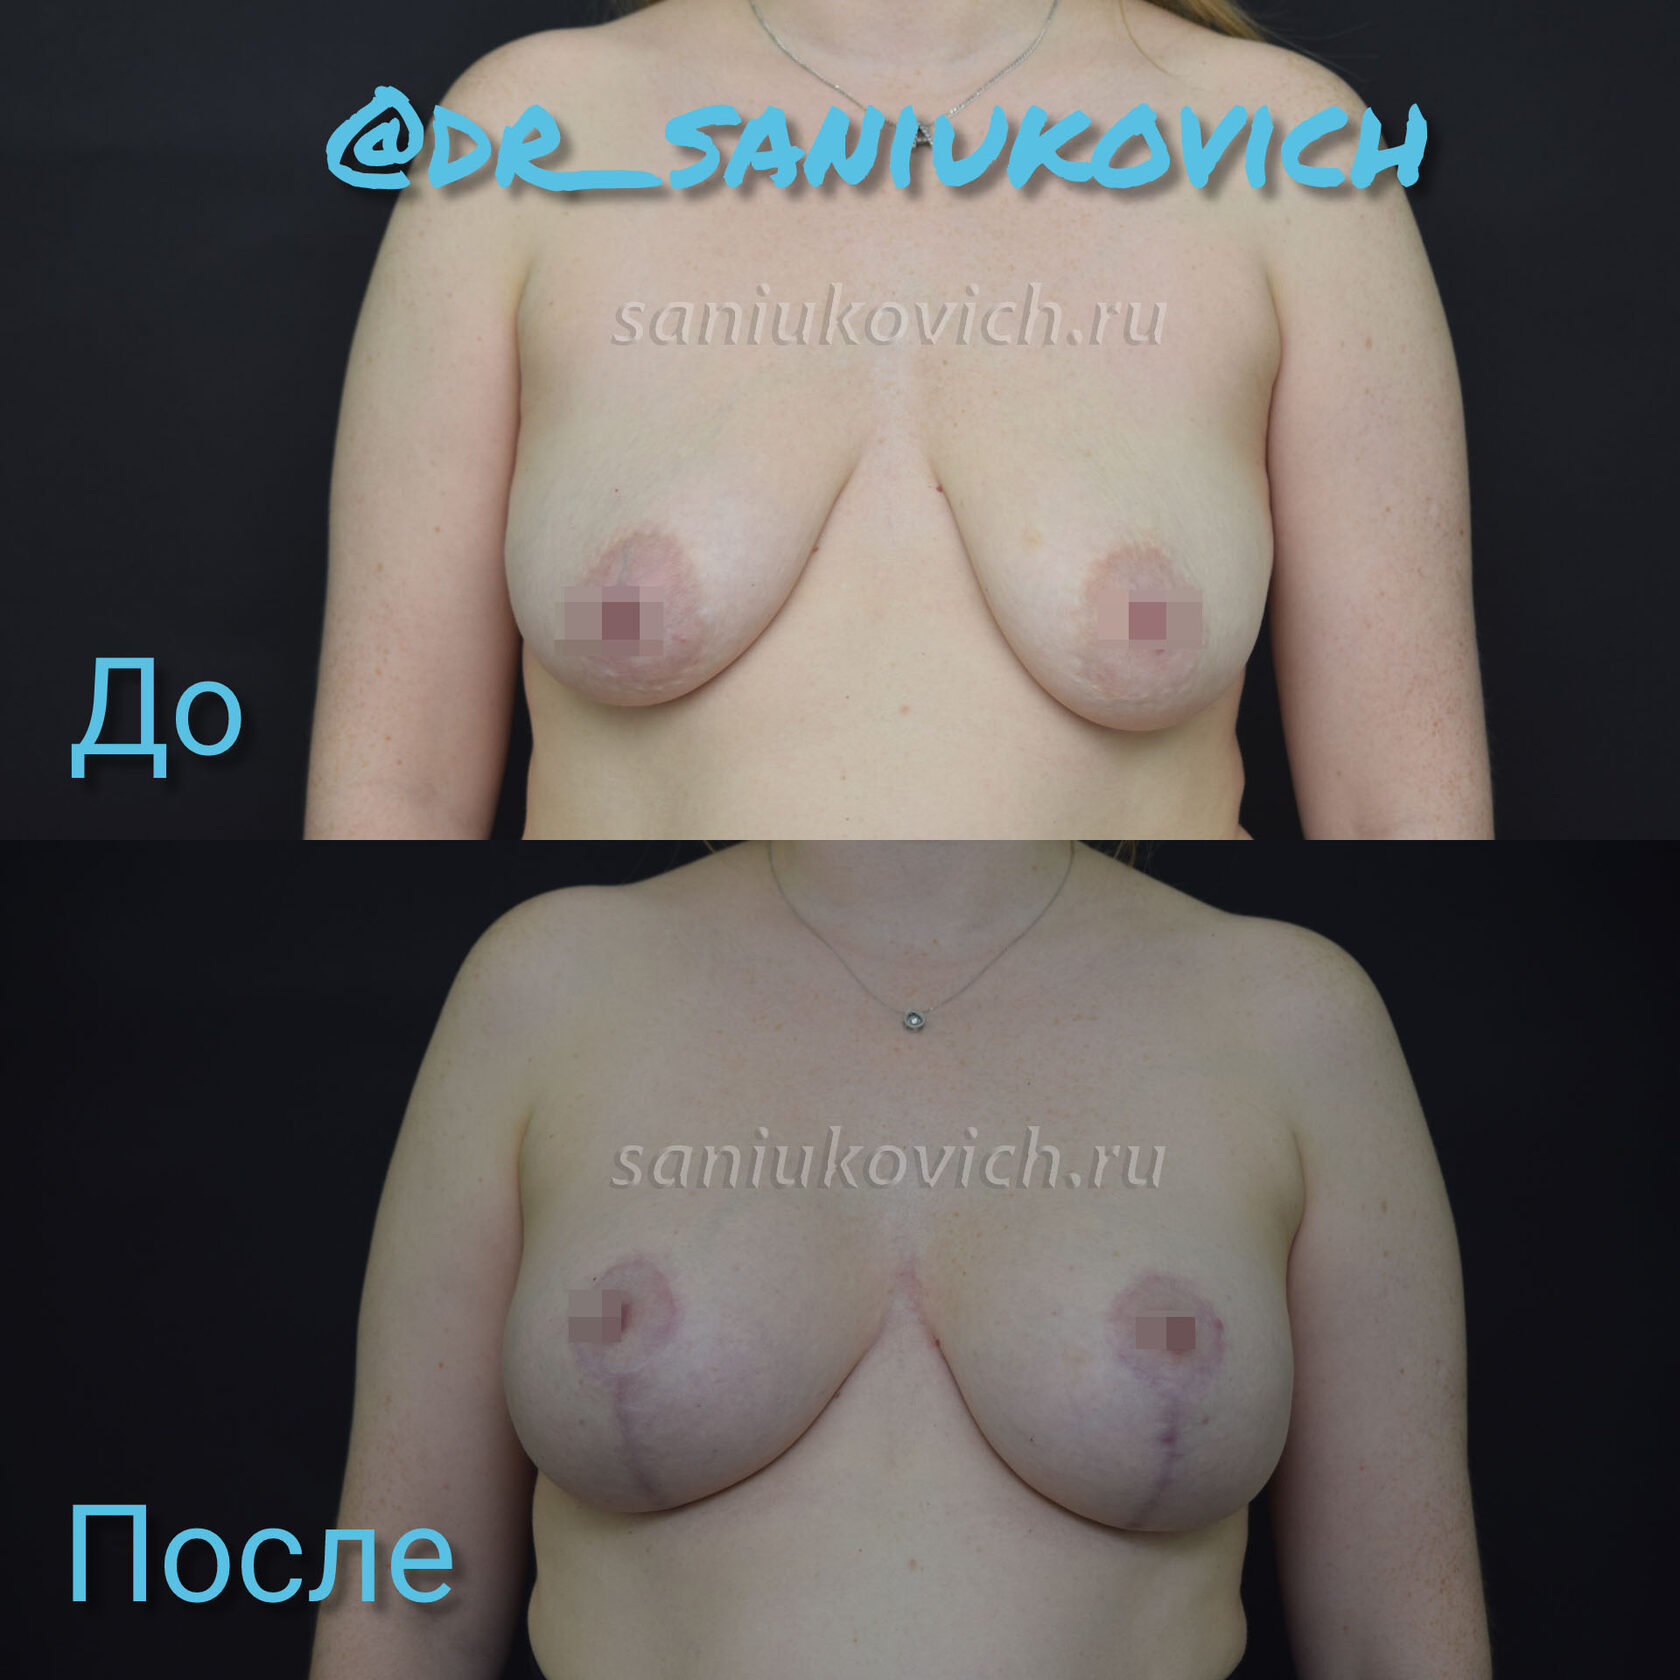 уменьшение груди для мужчин фото 84